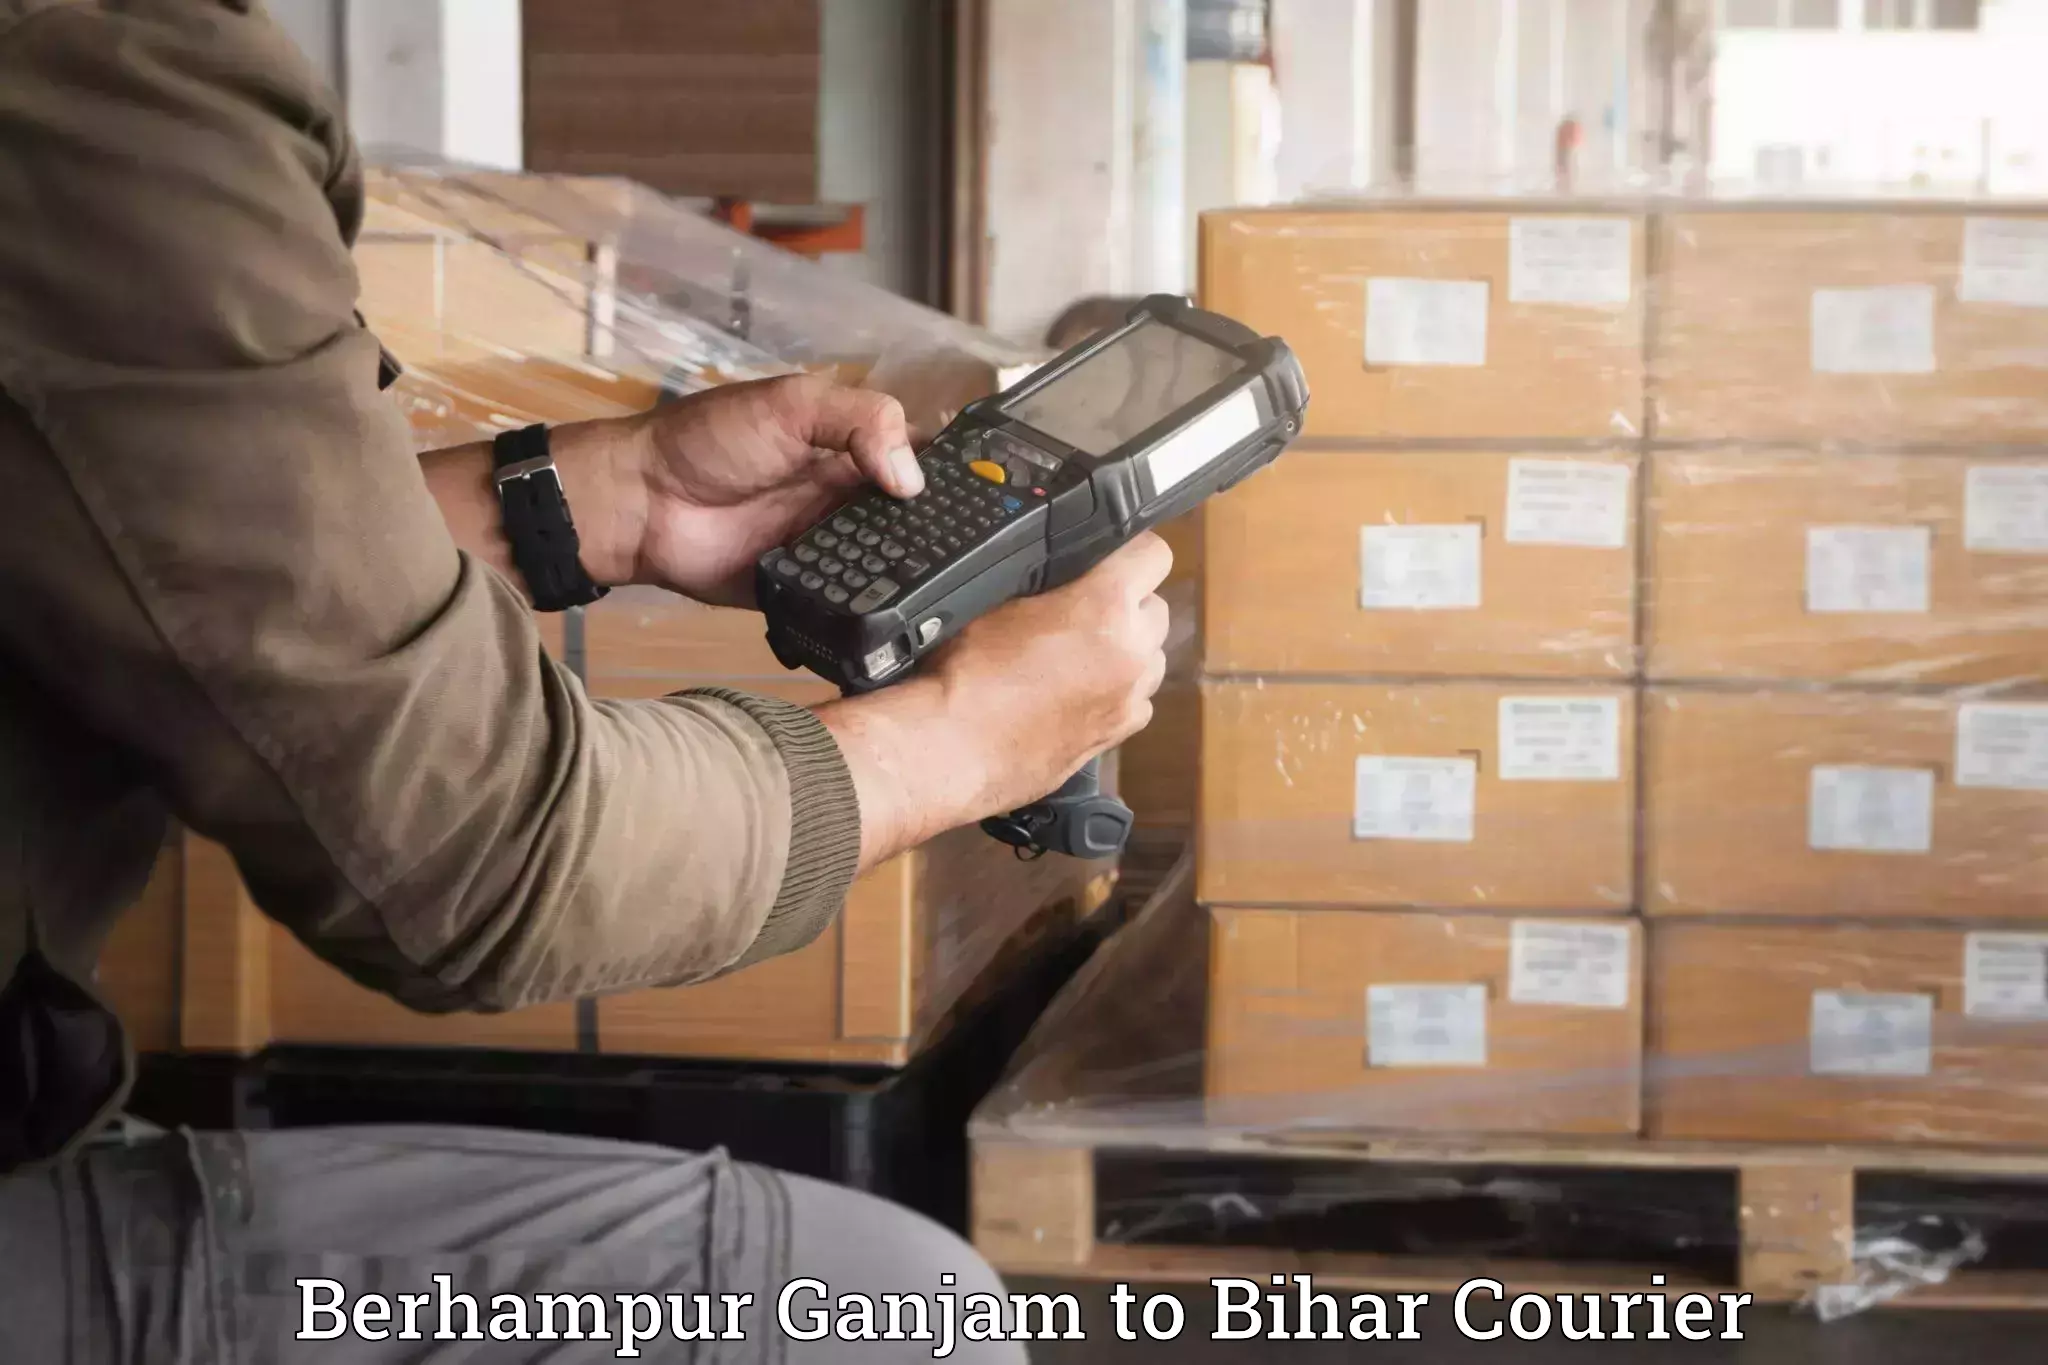 Furniture delivery service Berhampur Ganjam to Bihar